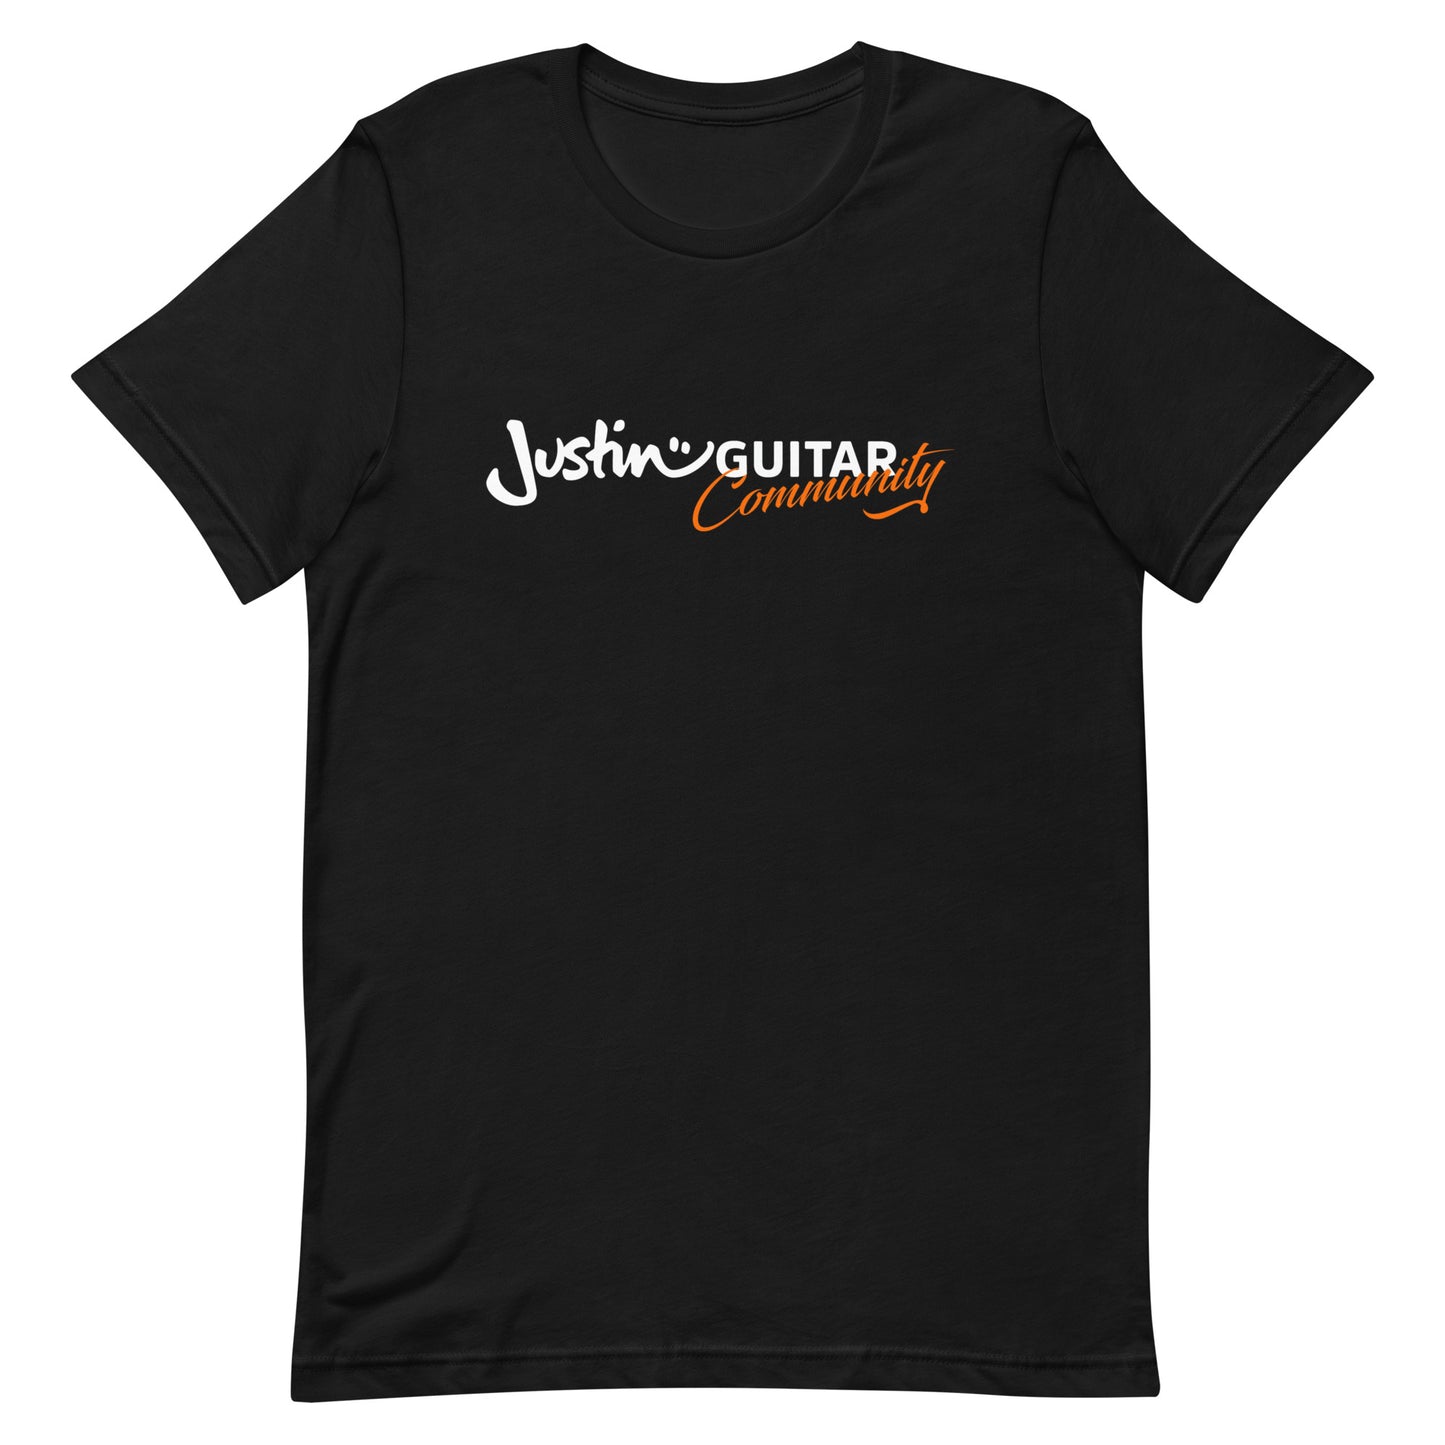 Black tshirt with JustinGuitar Community logo.